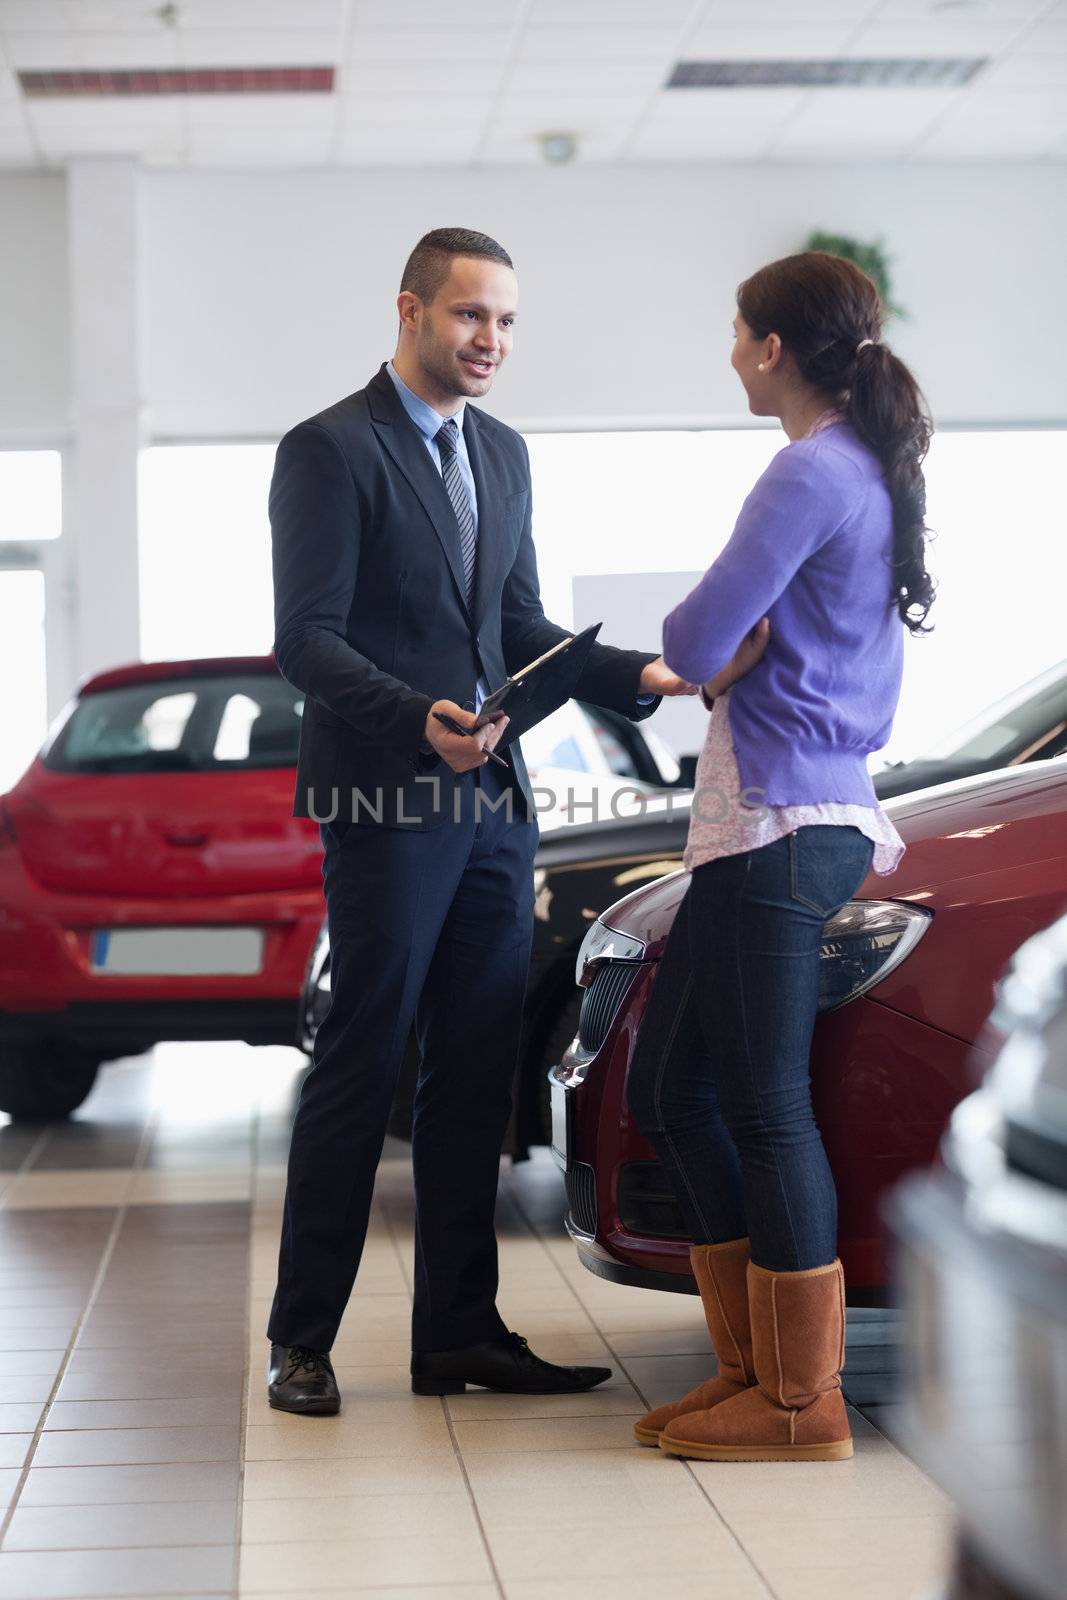 Salesman talking to a customer in a car shop